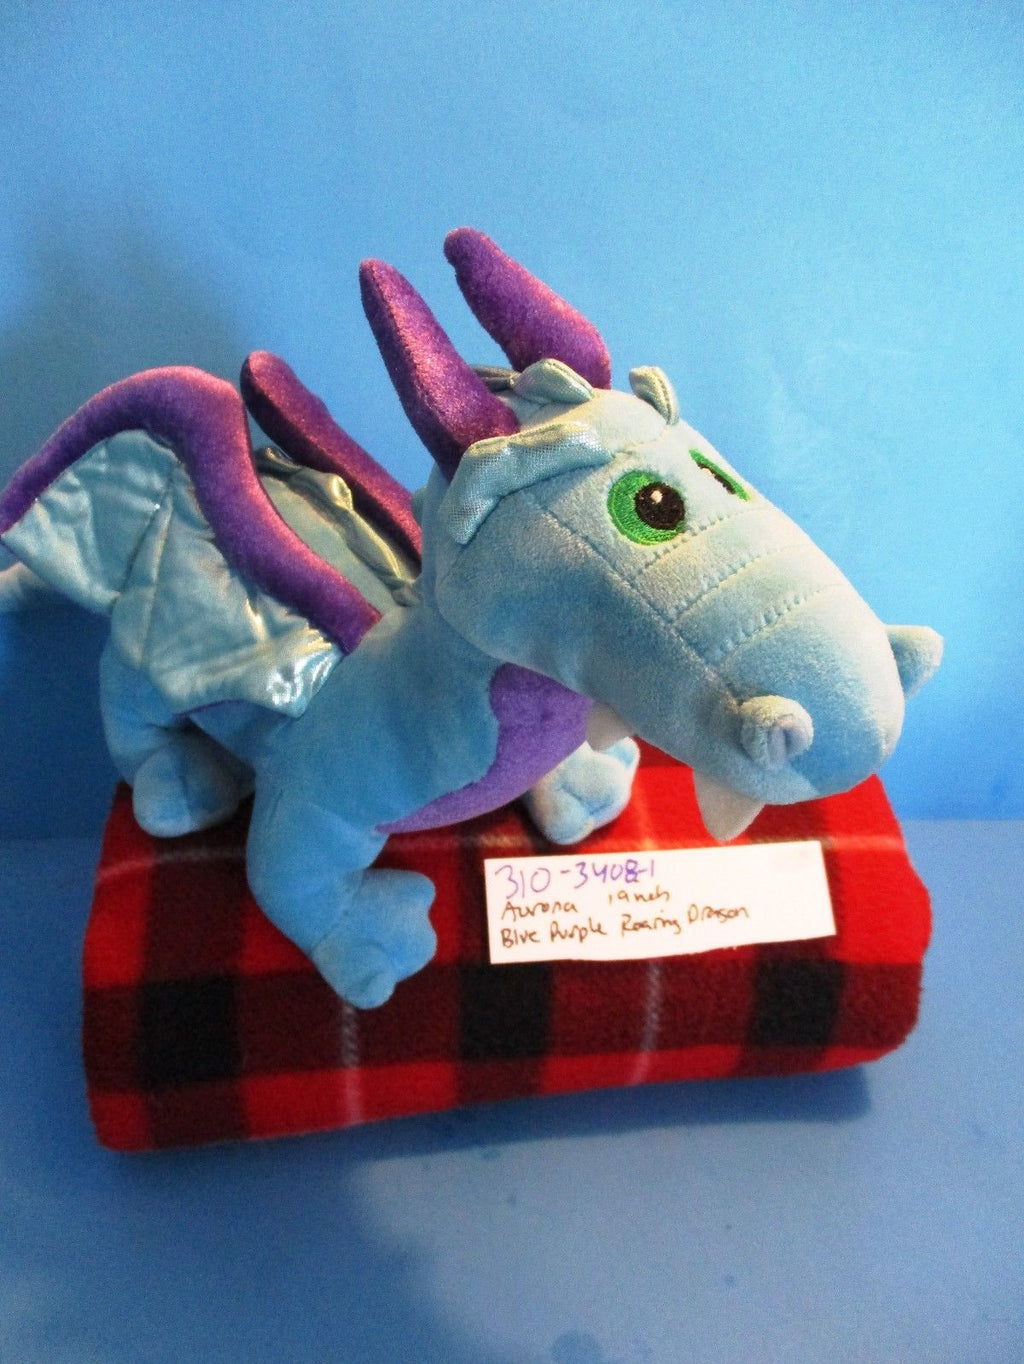 Aurora 8" Legendary Friends Dragon Plush Toy Sound Roars Red Green Fantasy 30776 for sale online 